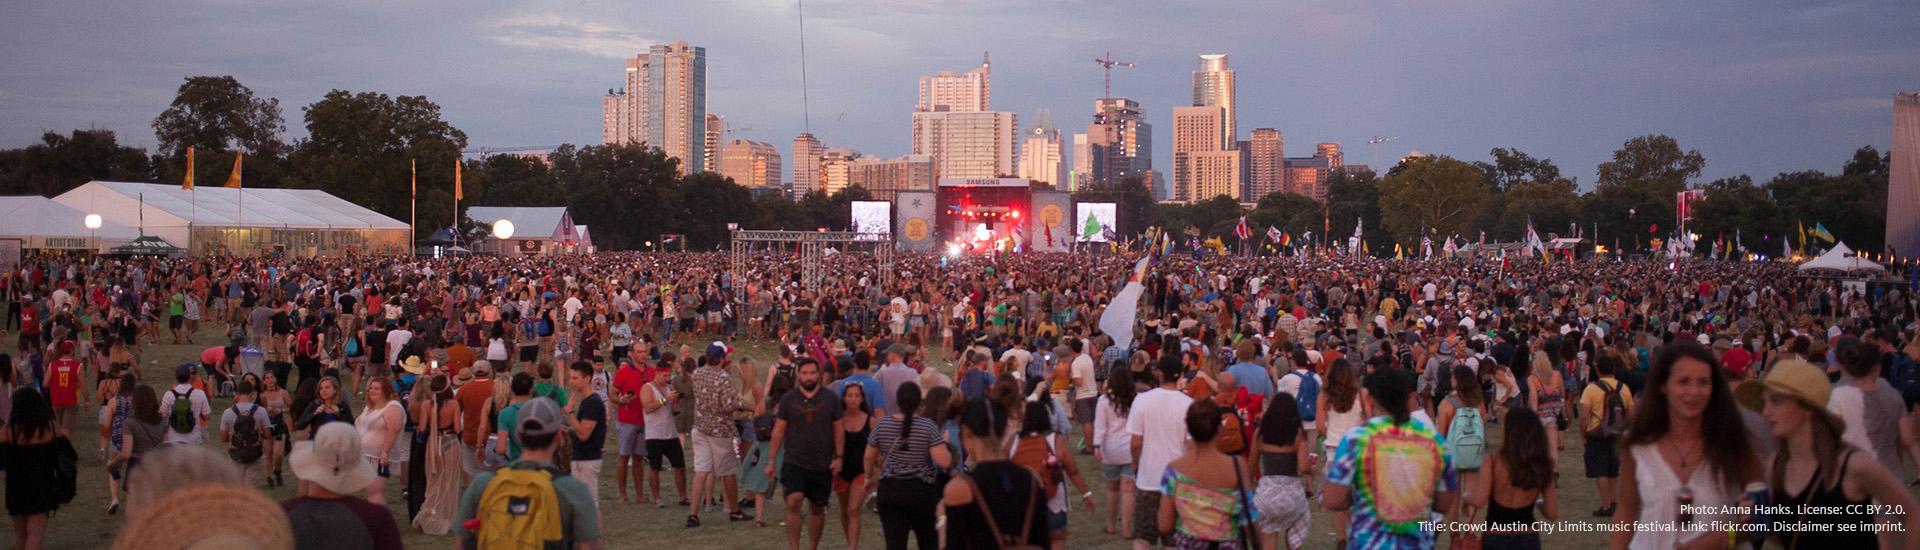 Photo: Anna Hanks. License: CC BY 2.0. Title: Crowd Austin City Limits music festival. Link: flickr.com. Disclaimer see imprint.